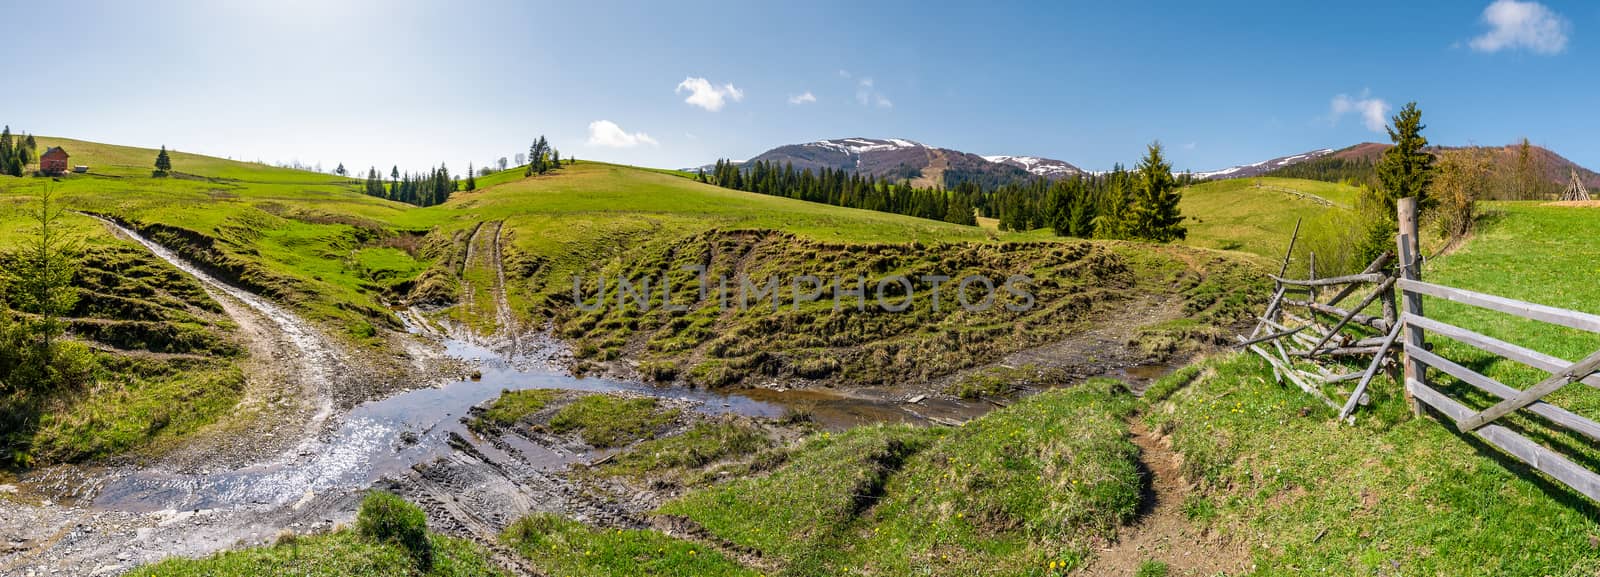 panorama of mountainous rural countryside by Pellinni